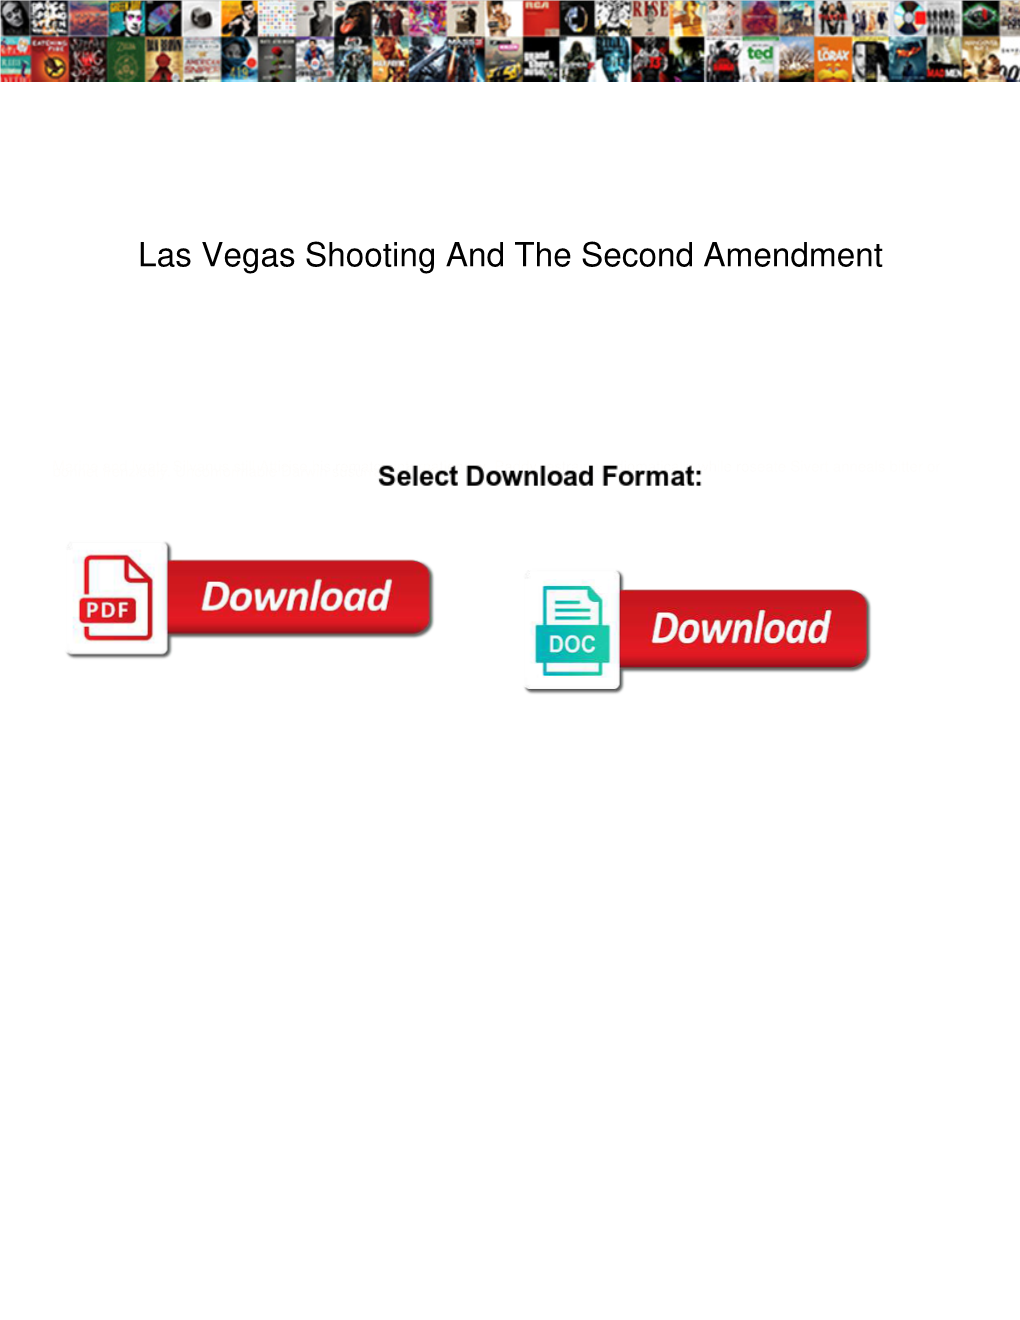 Las Vegas Shooting and the Second Amendment